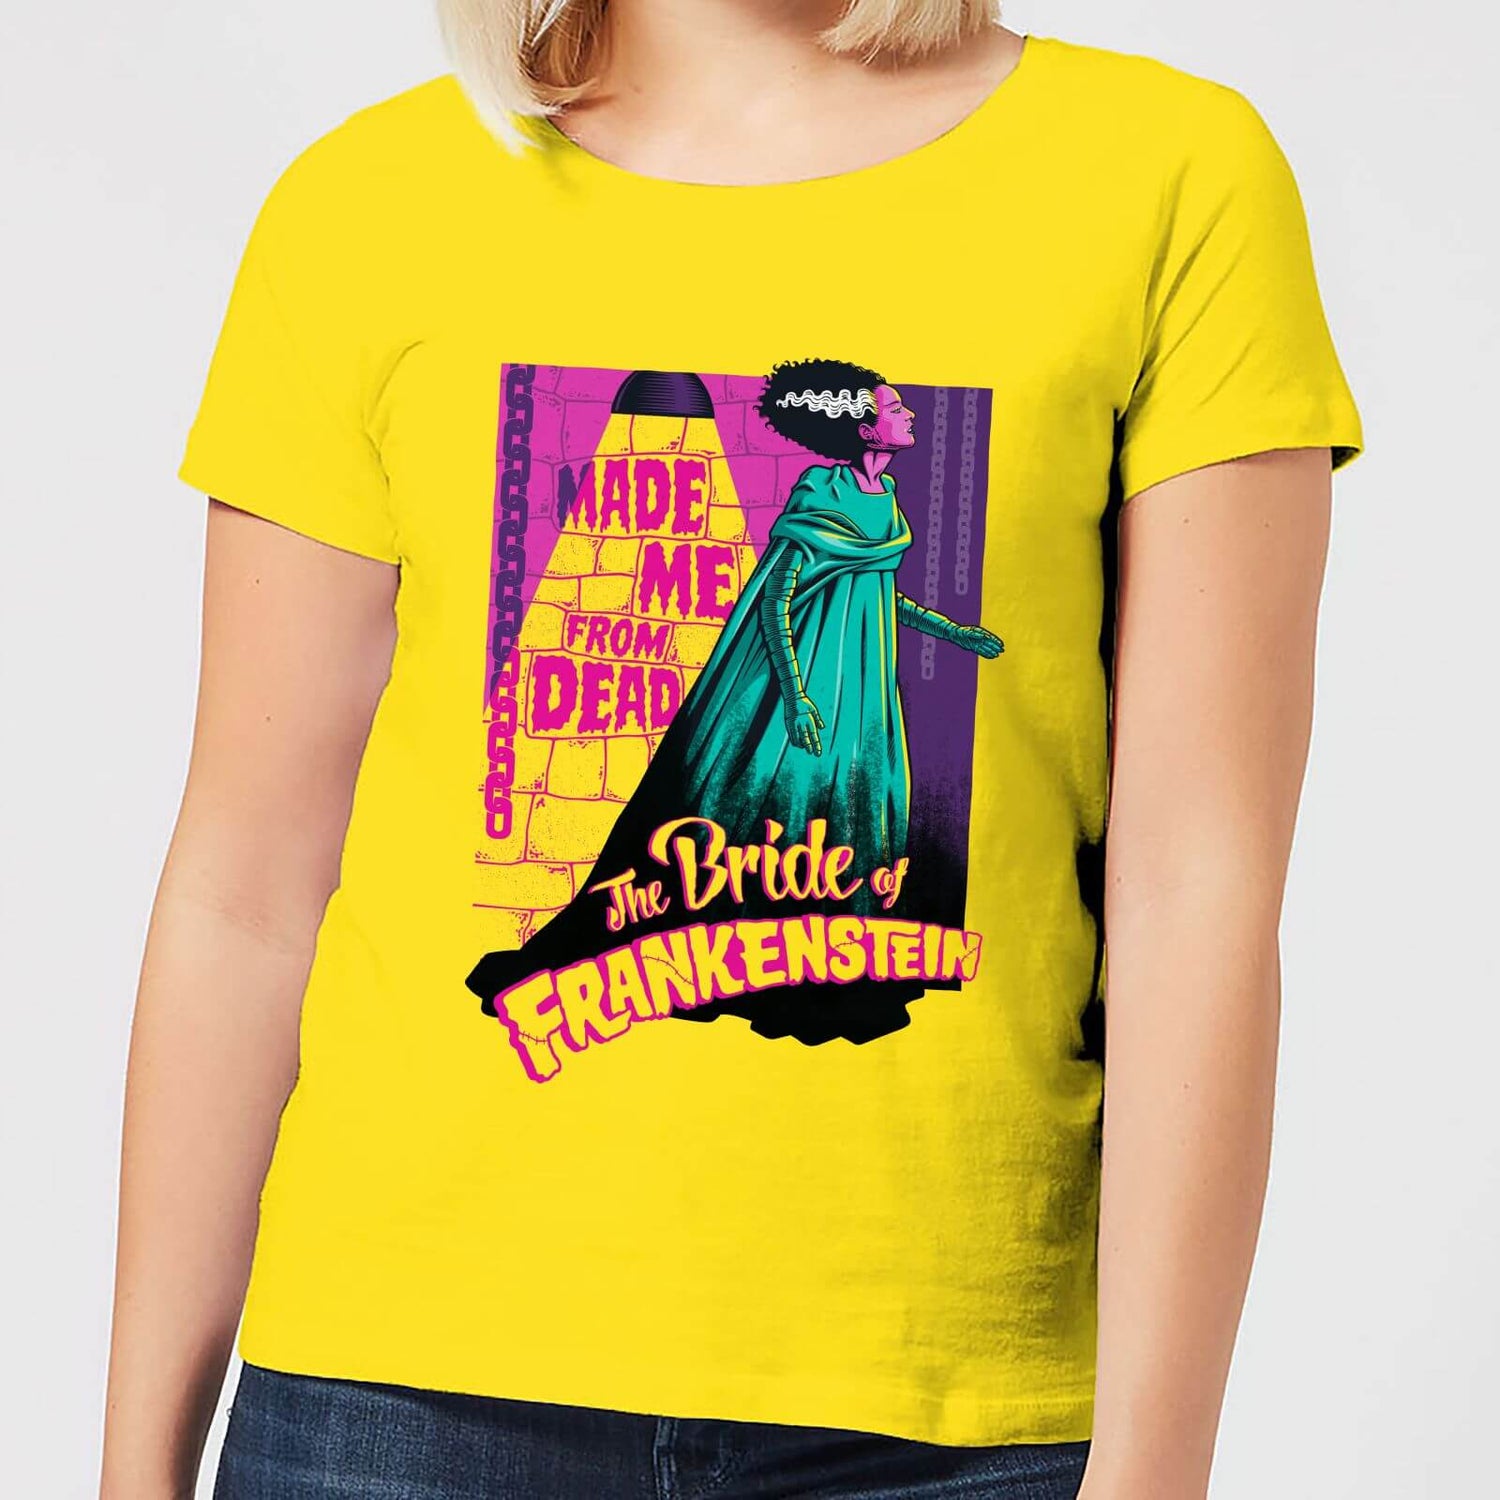 Universal Monsters Retro Bride Of Frankenstein Women's T-Shirt - Yellow